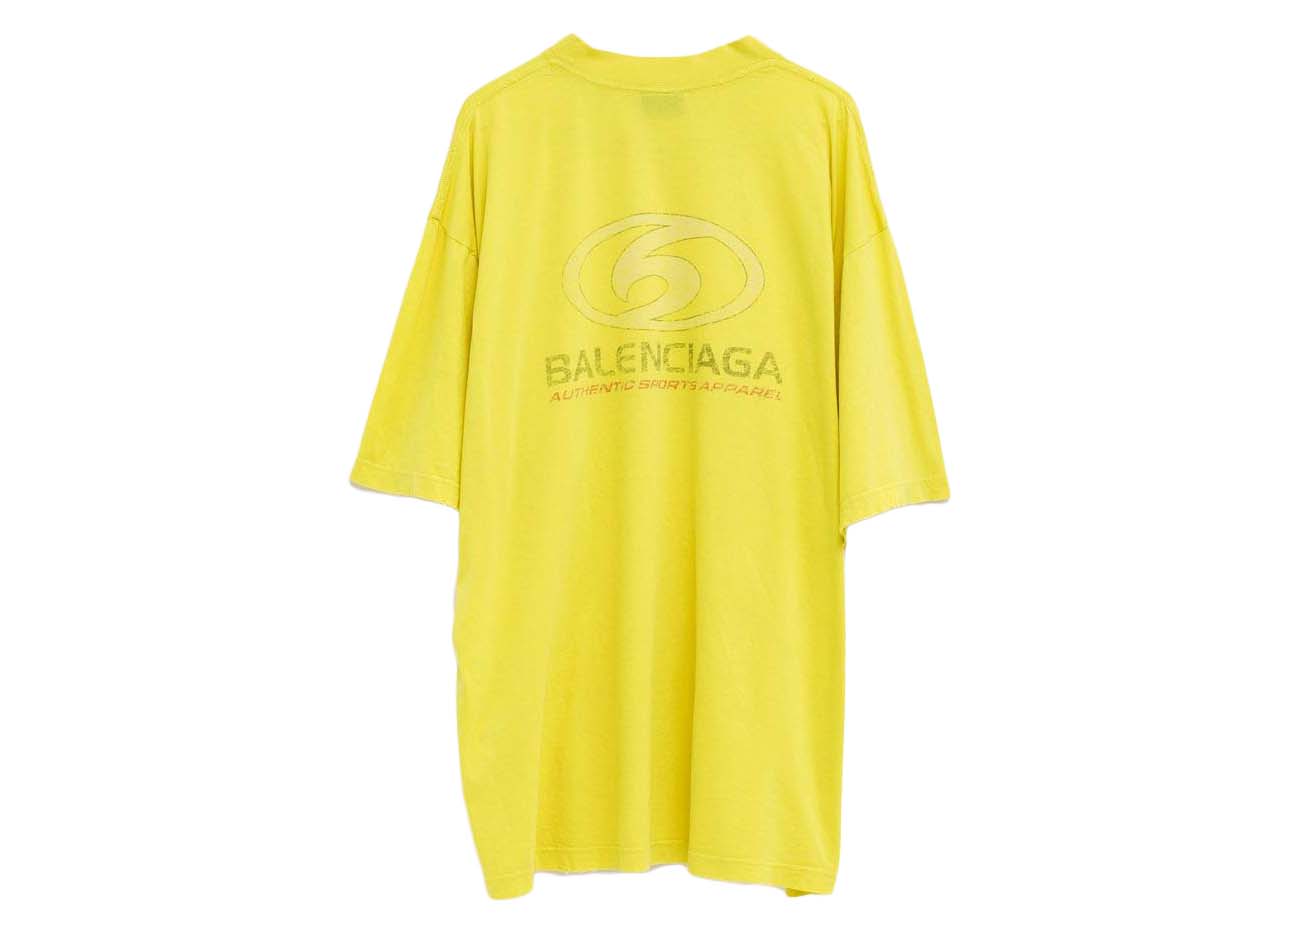 Balenciaga Surfer T-shirt Medium Fit Yellow